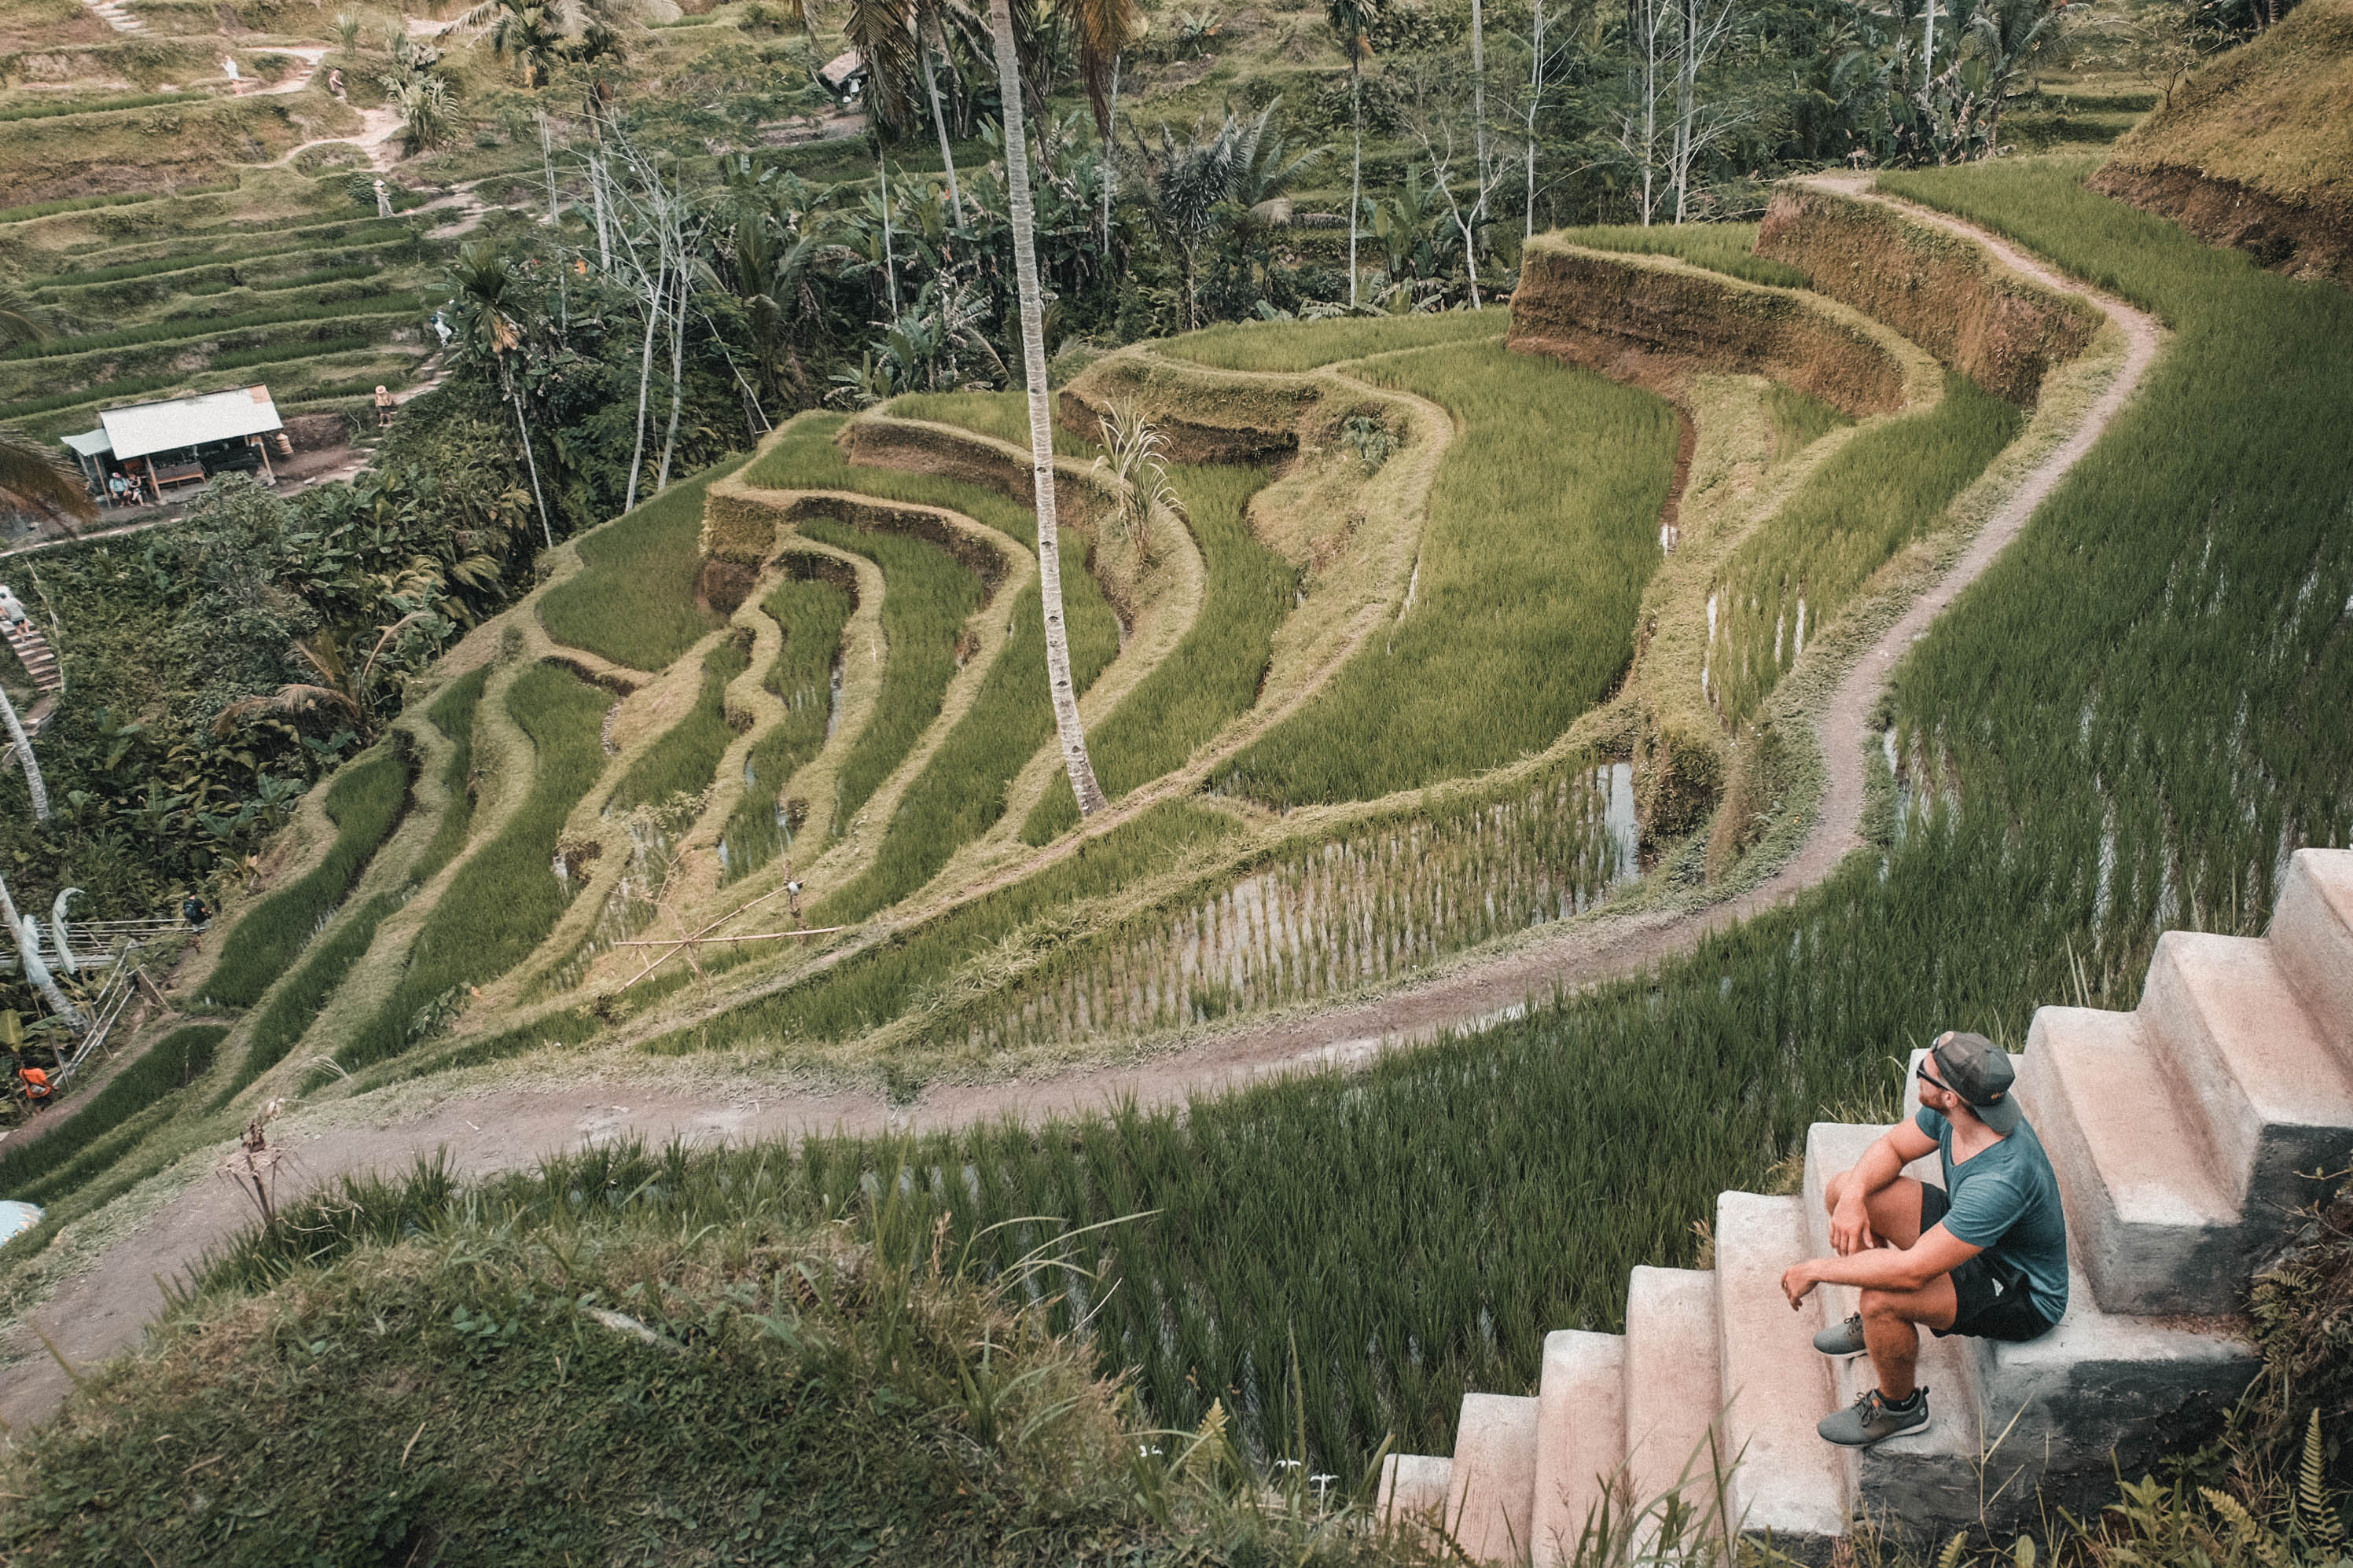 tegalalang rice terrace